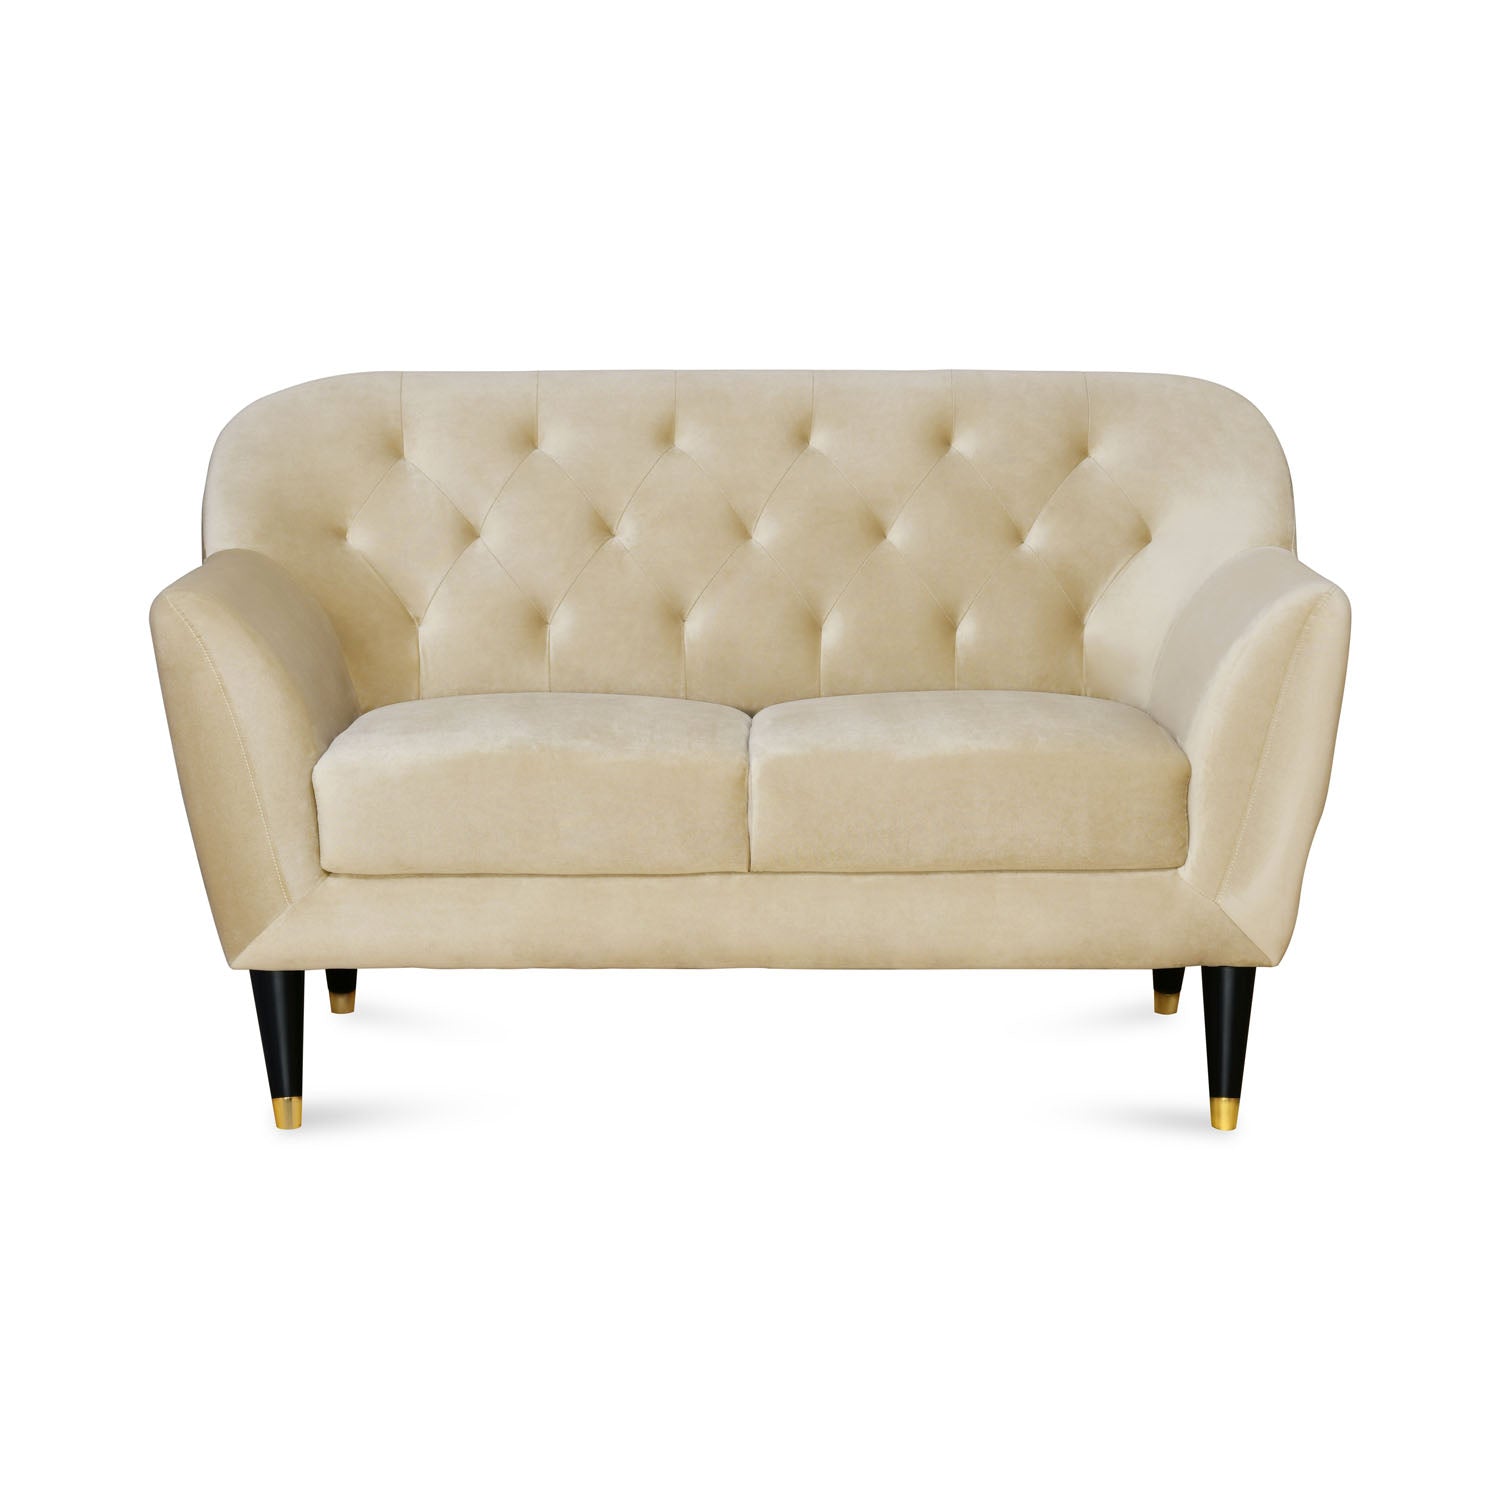 Roslin 2 Seater Fabric Sofa (Beige)